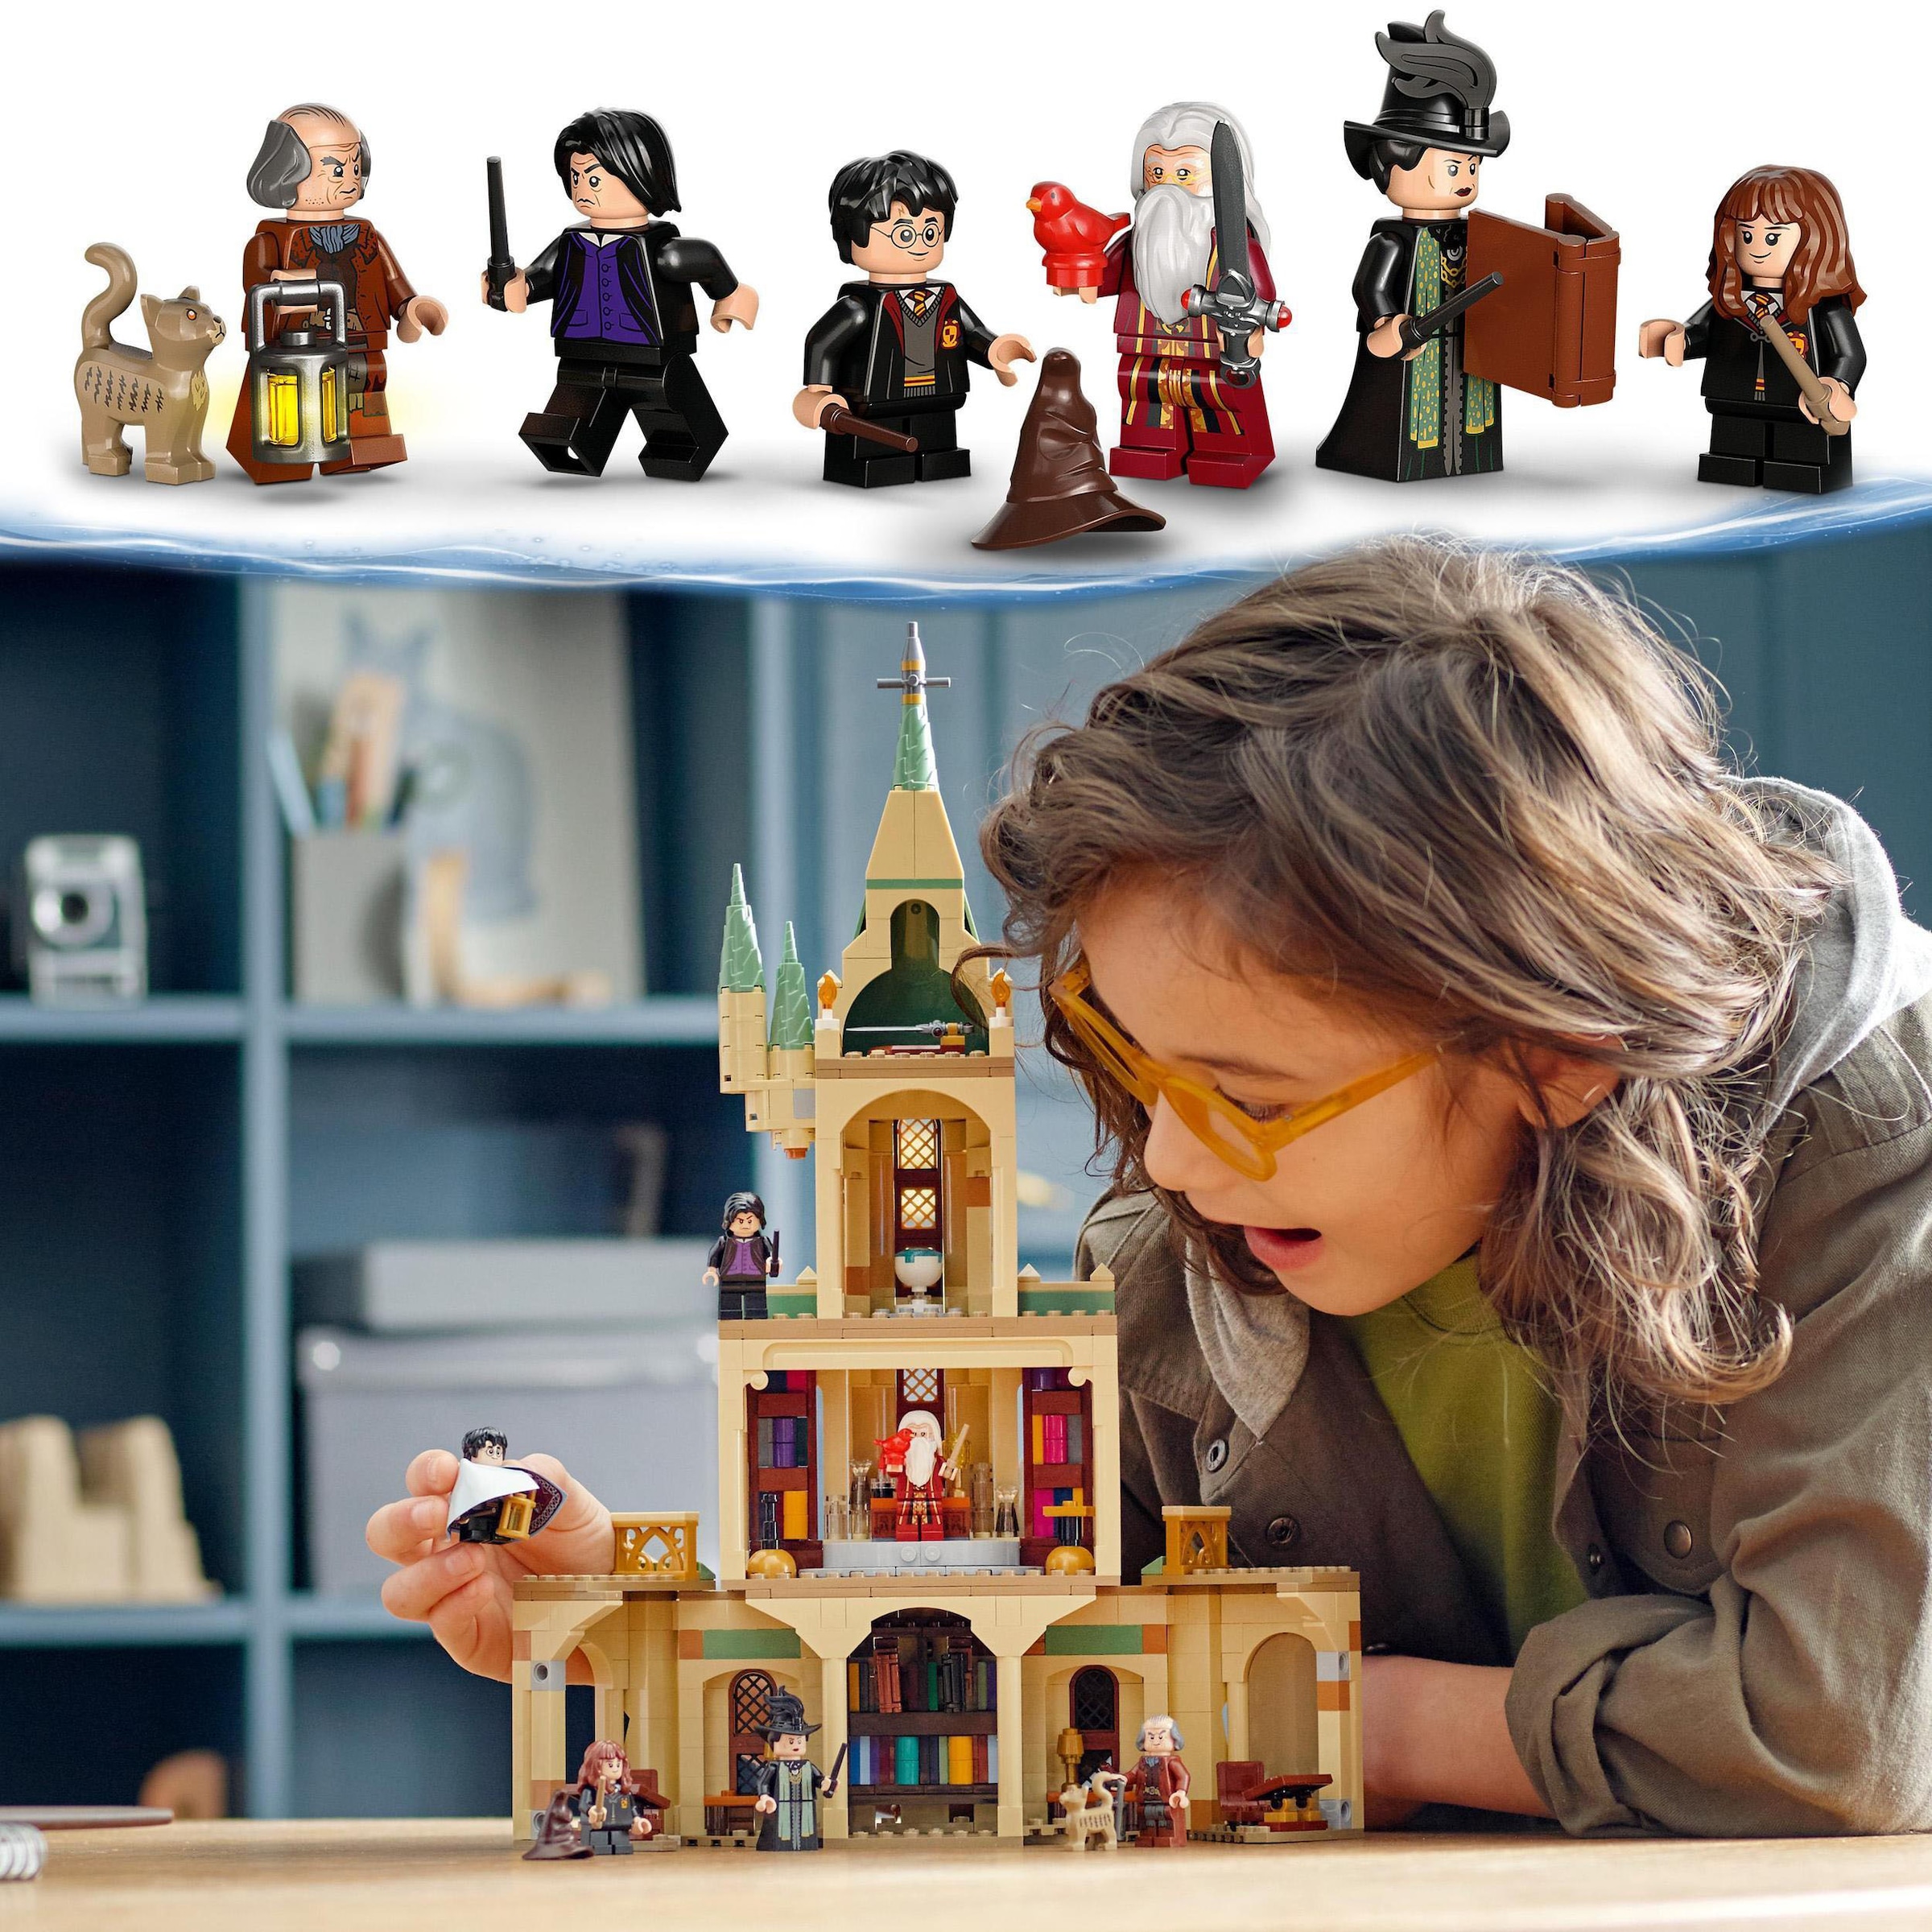 LEGO® Konstruktionsspielsteine »Hogwarts™: Dumbledores Büro (76402), LEGO® Harry Potter«, (654 St.), Made in Europe